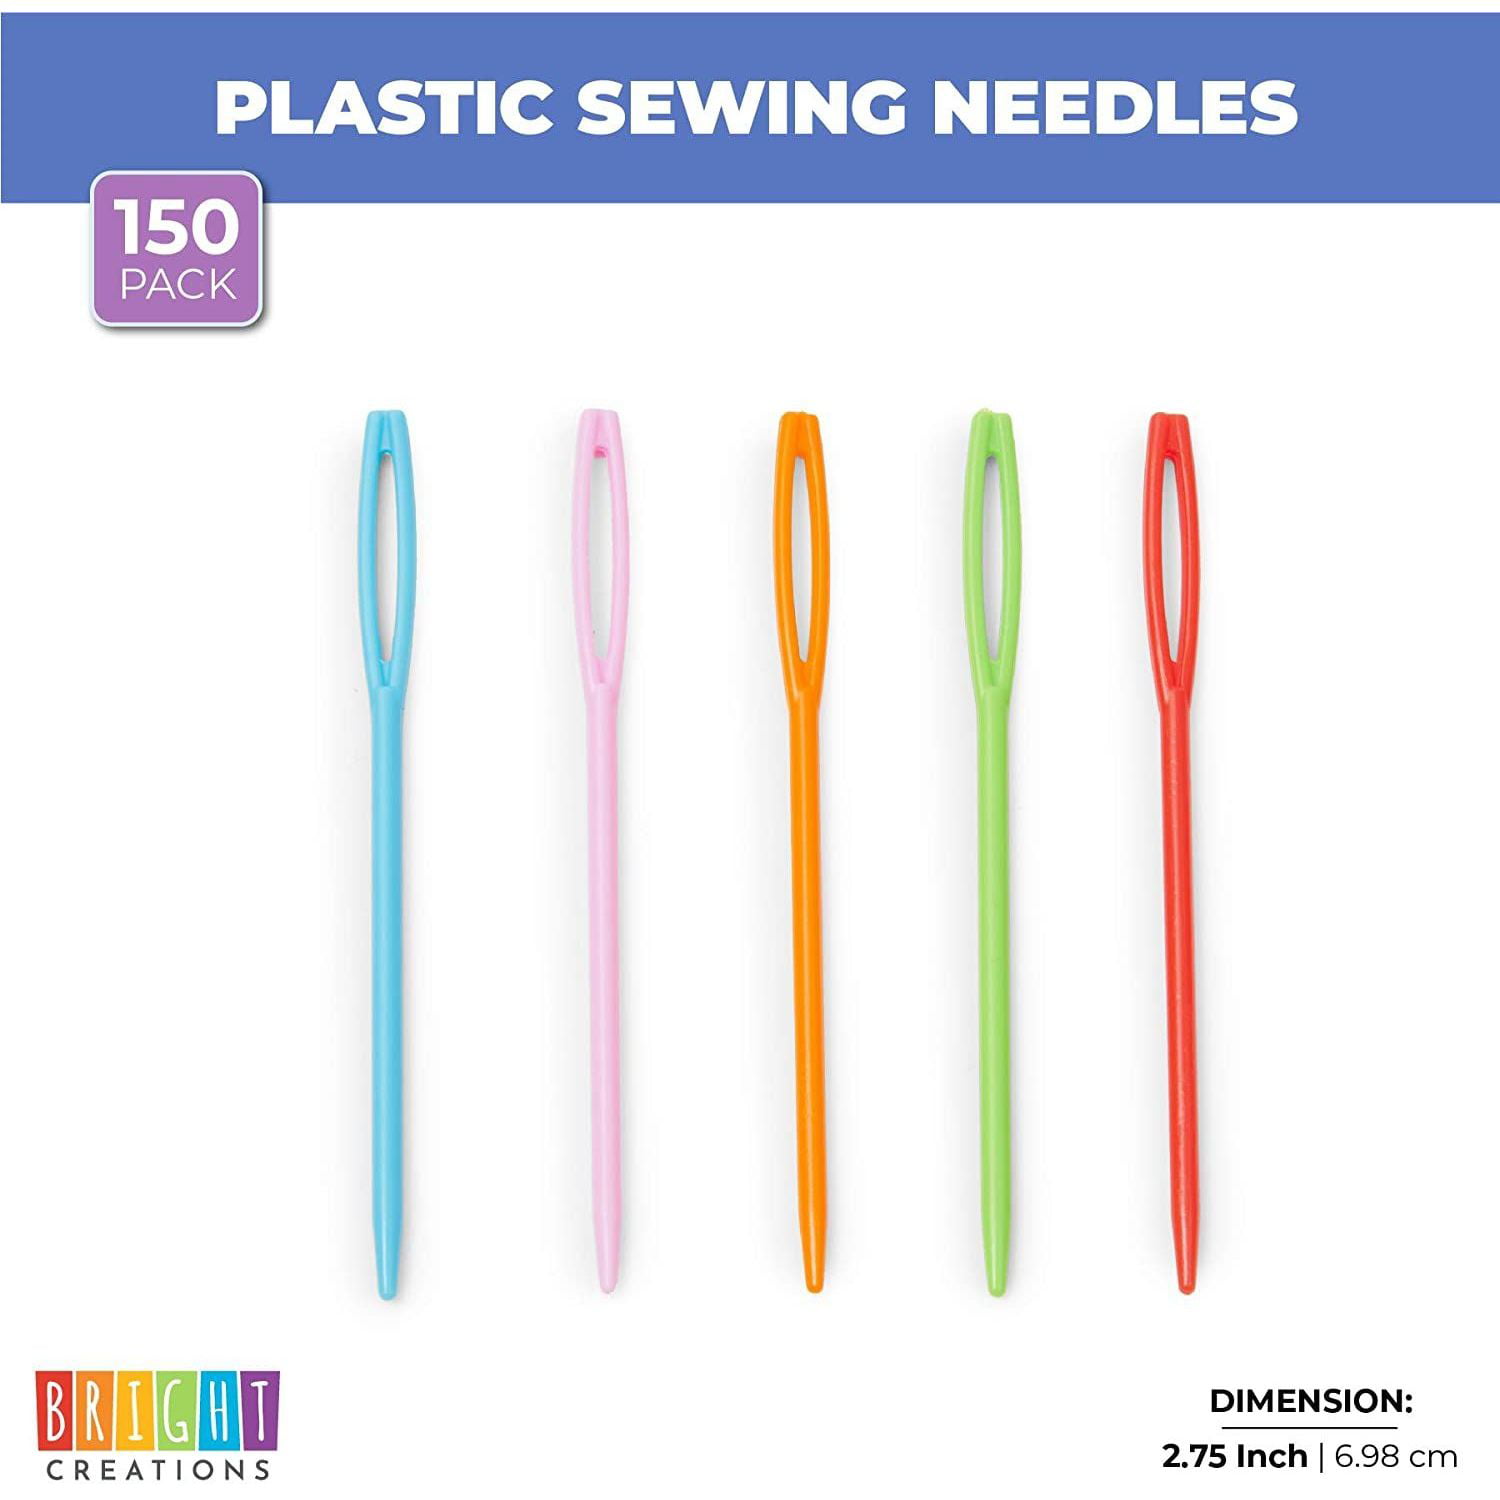 20//50pcs Large Eye Plastic Needles Safety Weaving Yarn Needles for Sewing Crafts